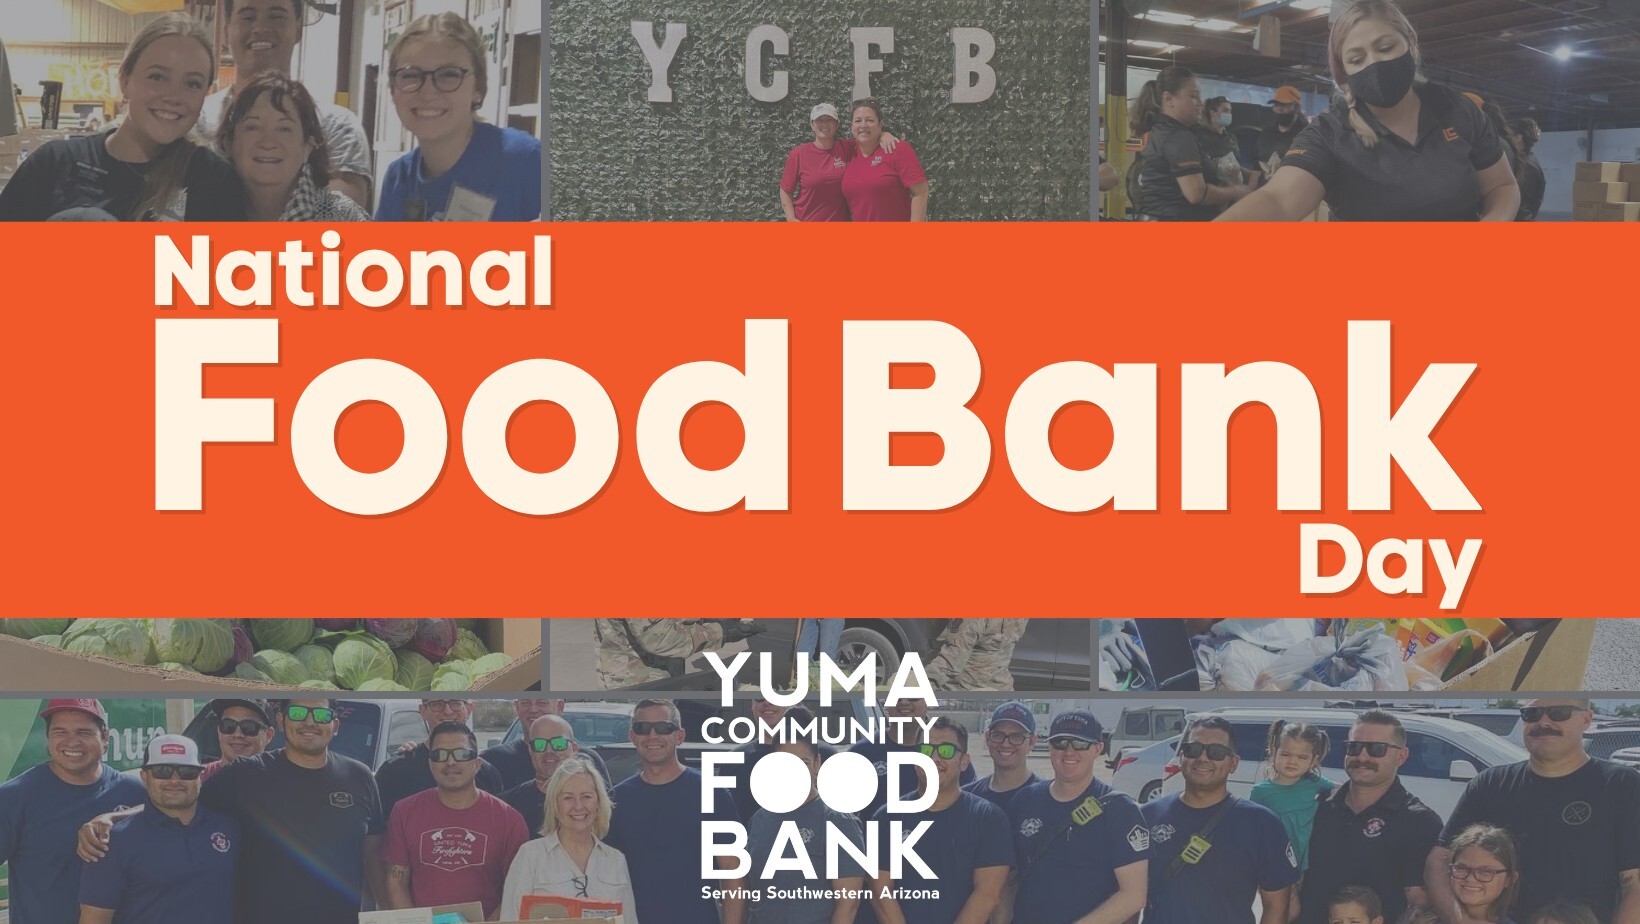 National Food Bank Day is September 2, 2022 Yuma Community Food Bank